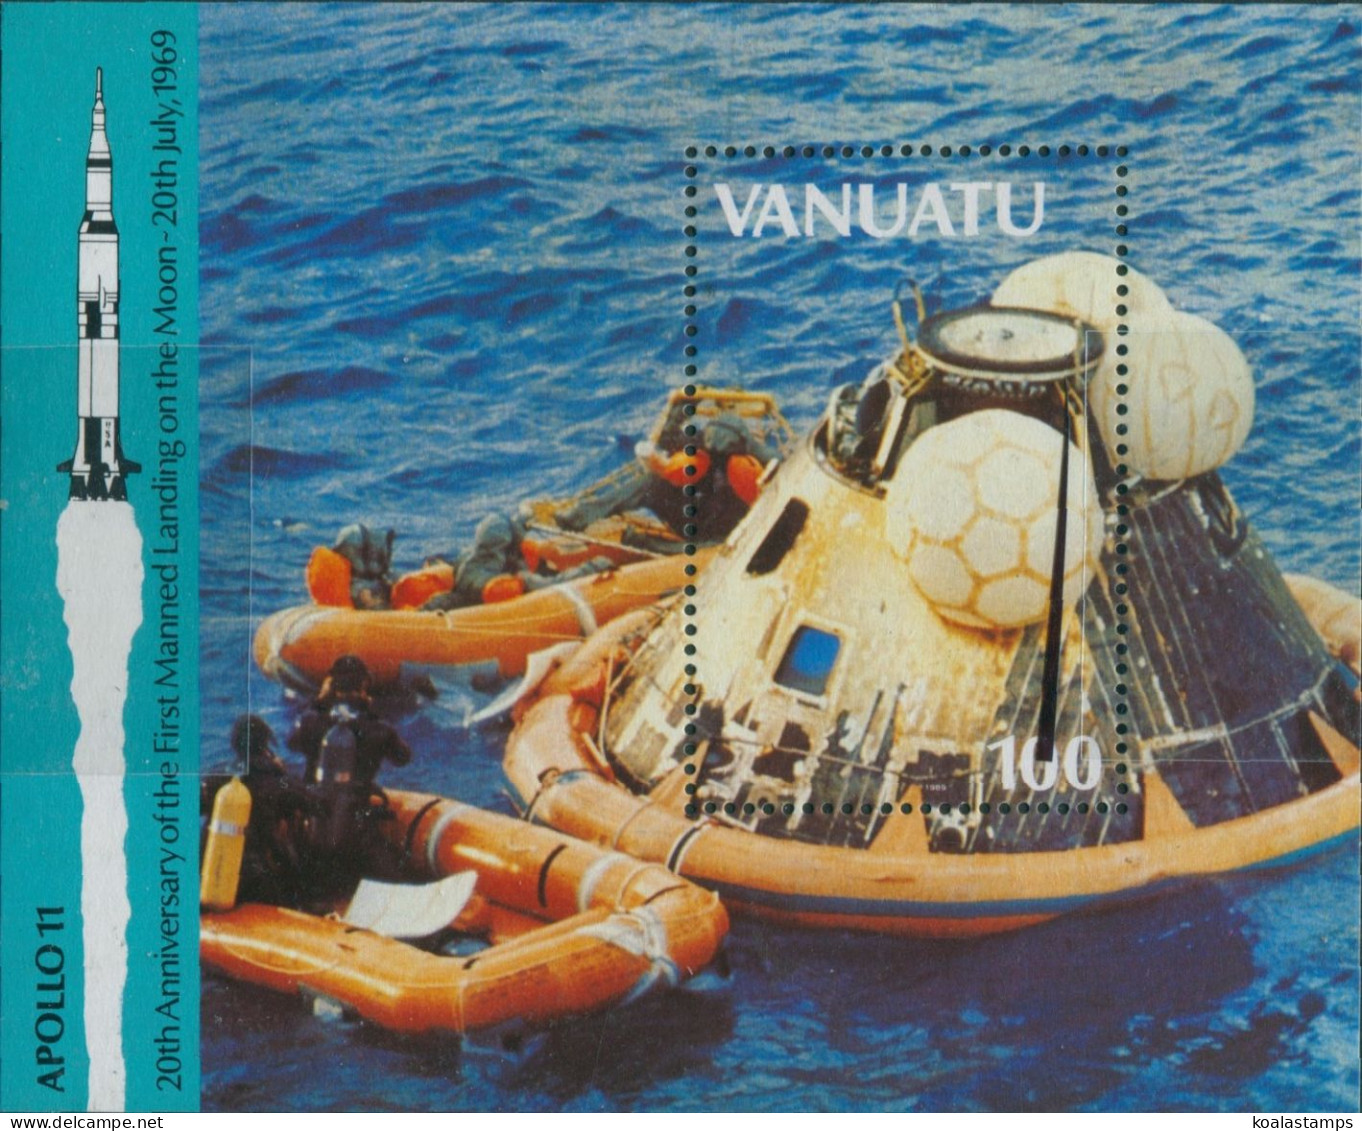 Vanuatu 1989 SG534 Moon Landing MS MNH - Vanuatu (1980-...)